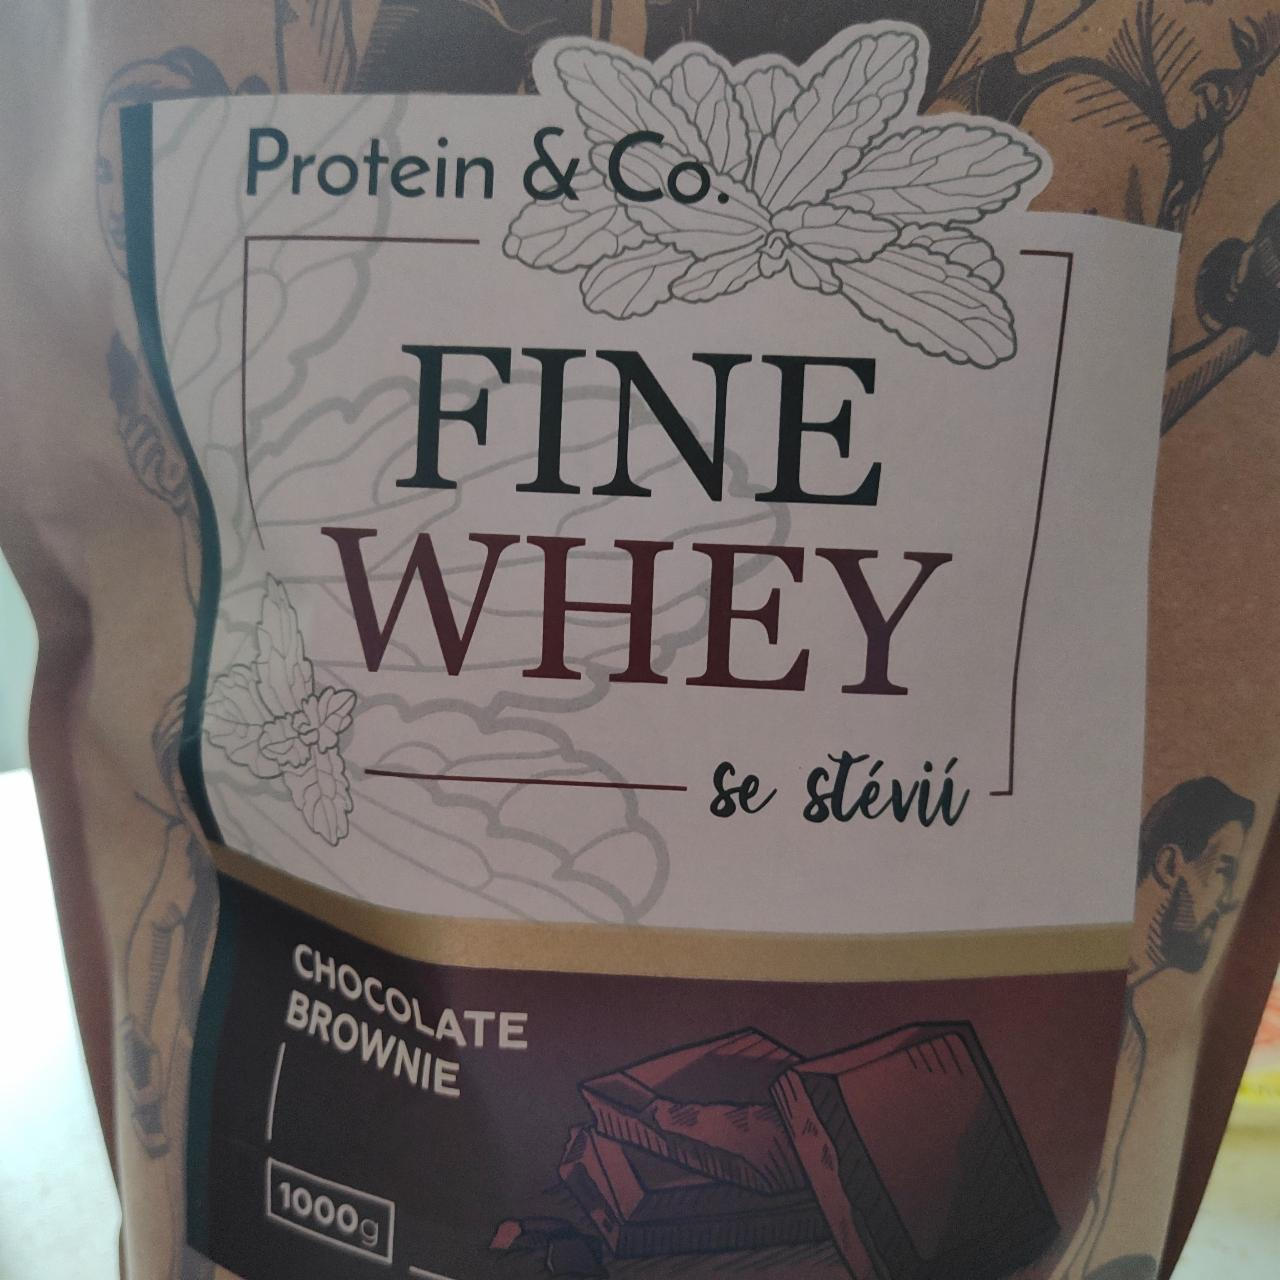 Fotografie - Fine whey protein se stévií chocolate brownie Protein & Co.